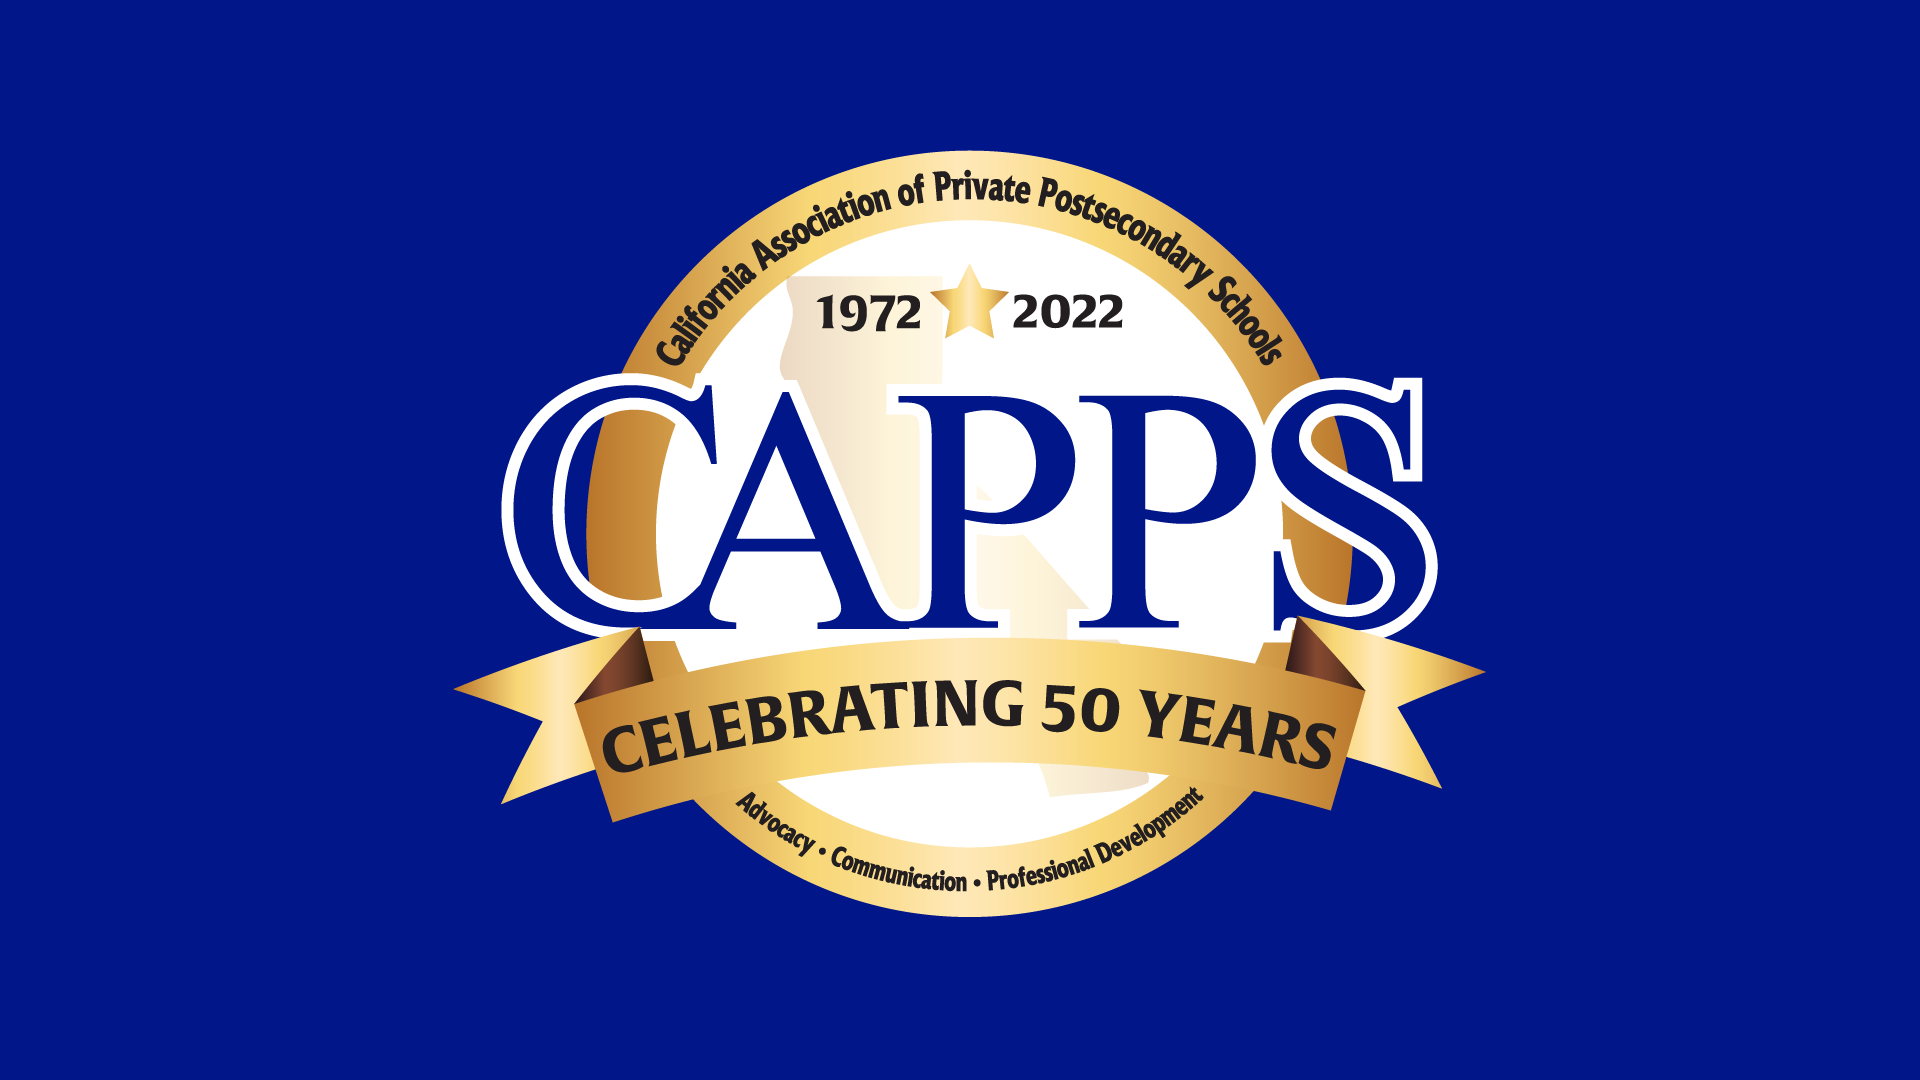 CAPPS 50th Anniversary Regale Webinar 2 11/17/2022 CAPPS